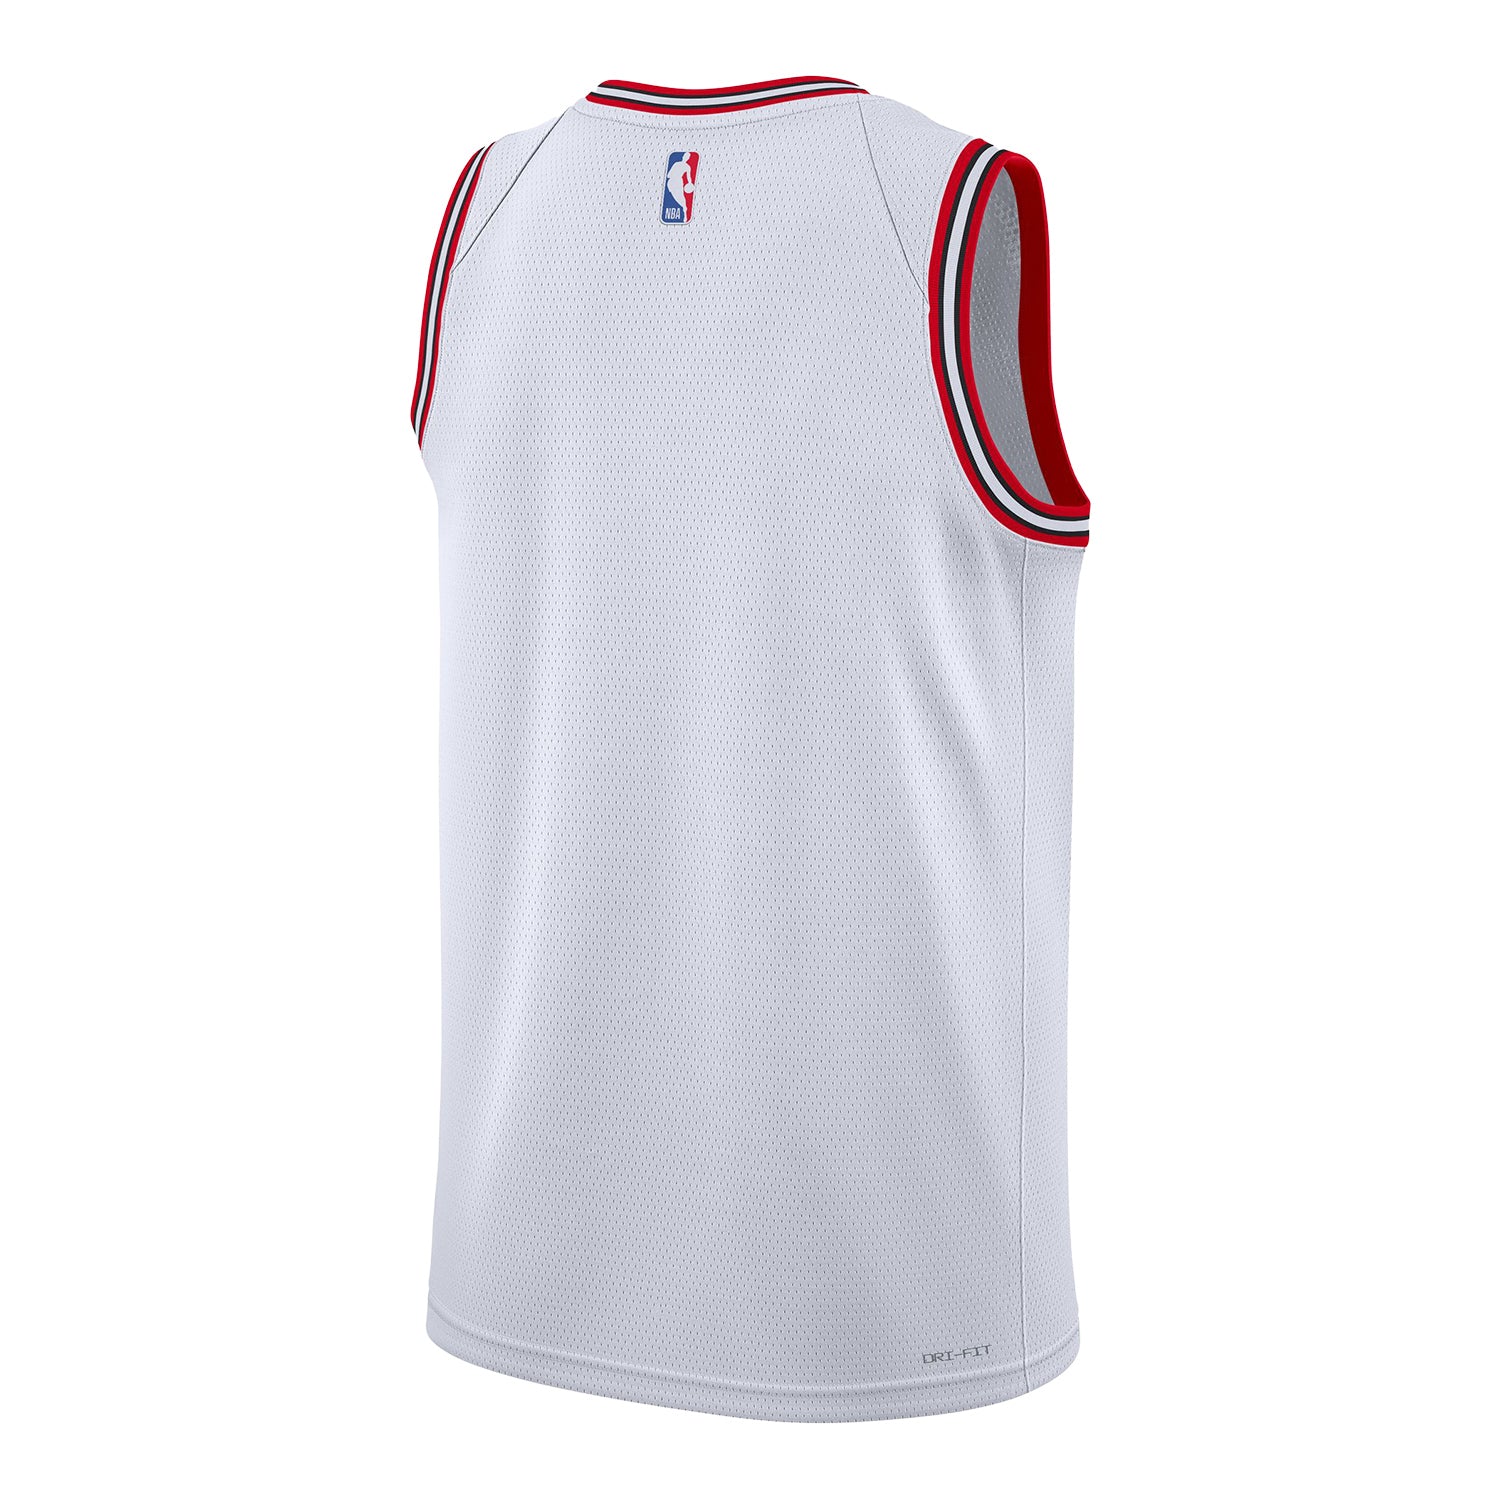 Camiseta Jordan Statement Swingman de los Chicago Bulls - Personalizada -  Unisex